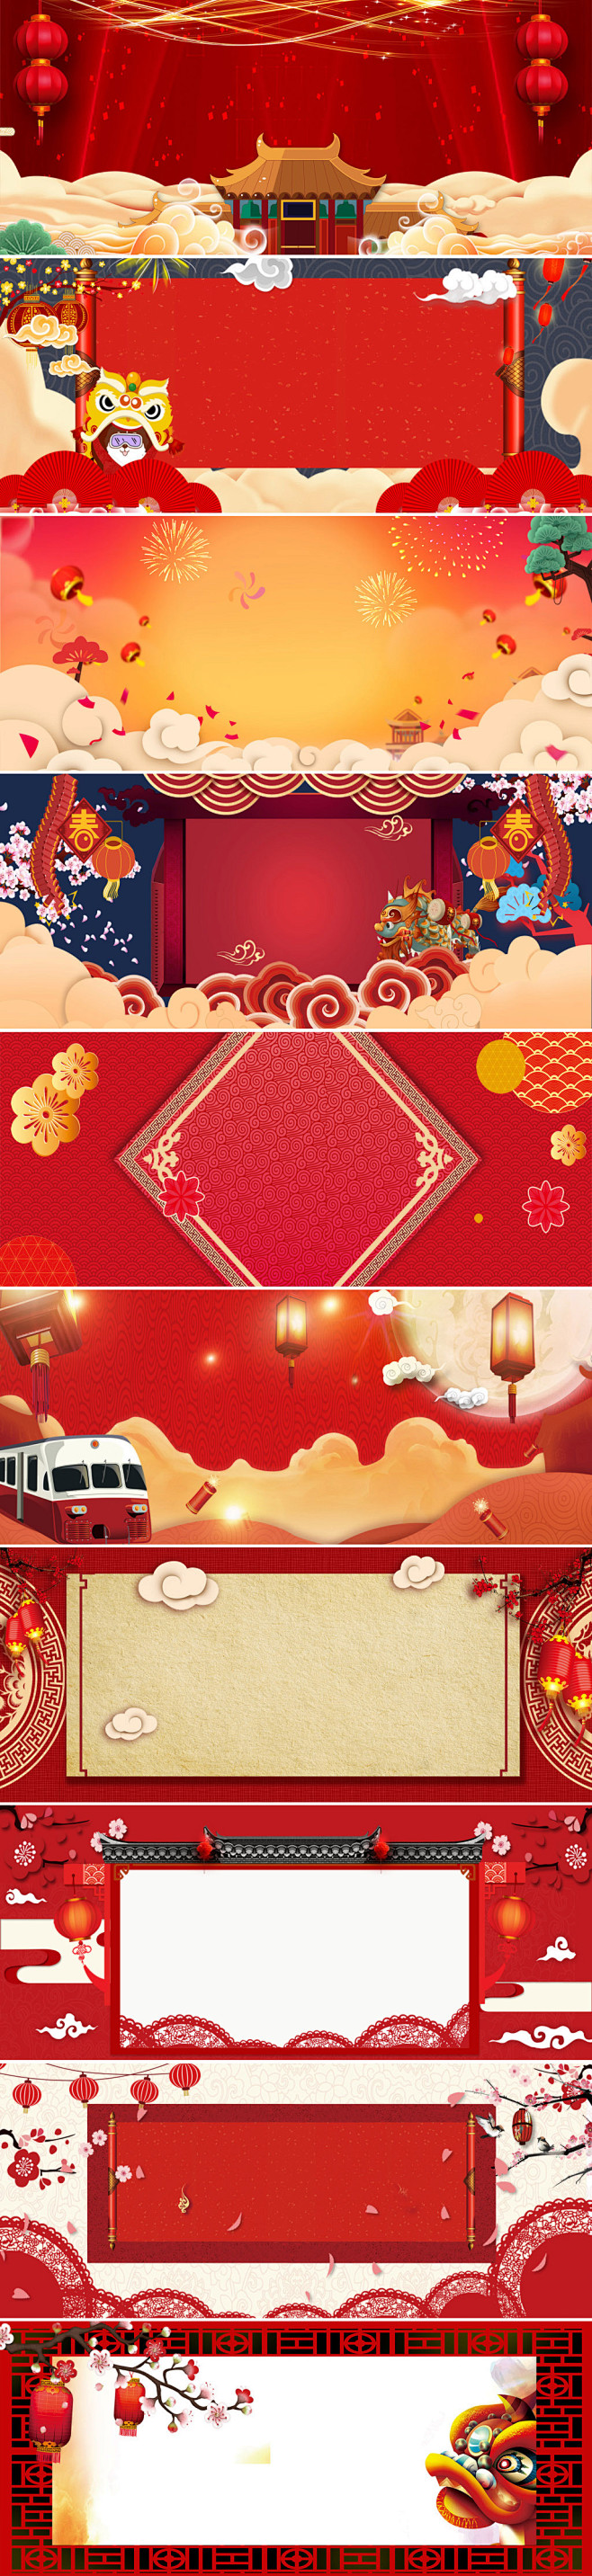 古典喜庆猪年年货节海报banner背景